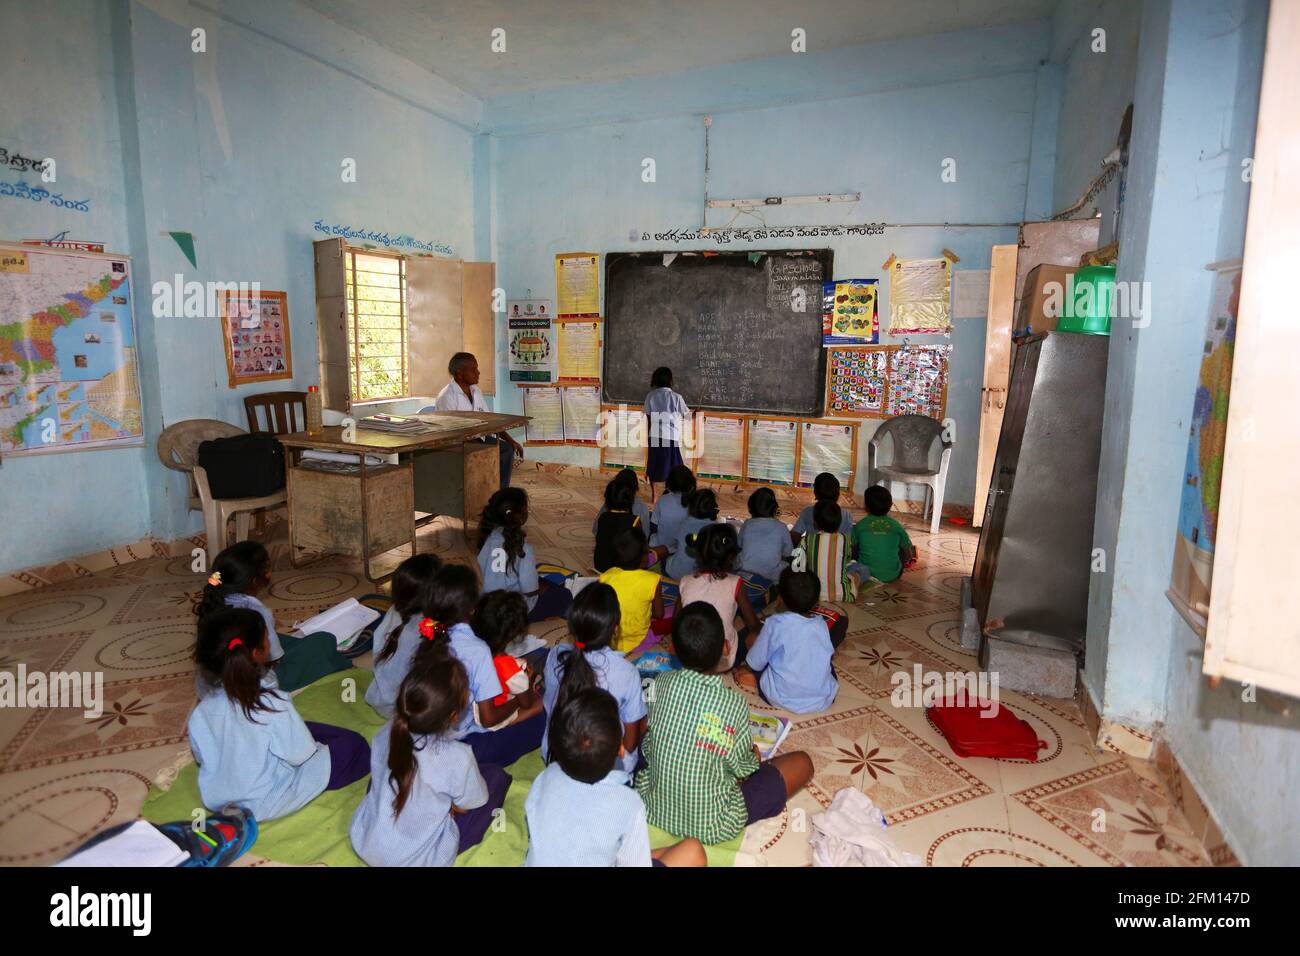 PARANGIPERJA STAMM- Grundschule Kinder studieren. Jakaravalasa Village, Araku, Andhra Pradesh, Indien Stockfoto